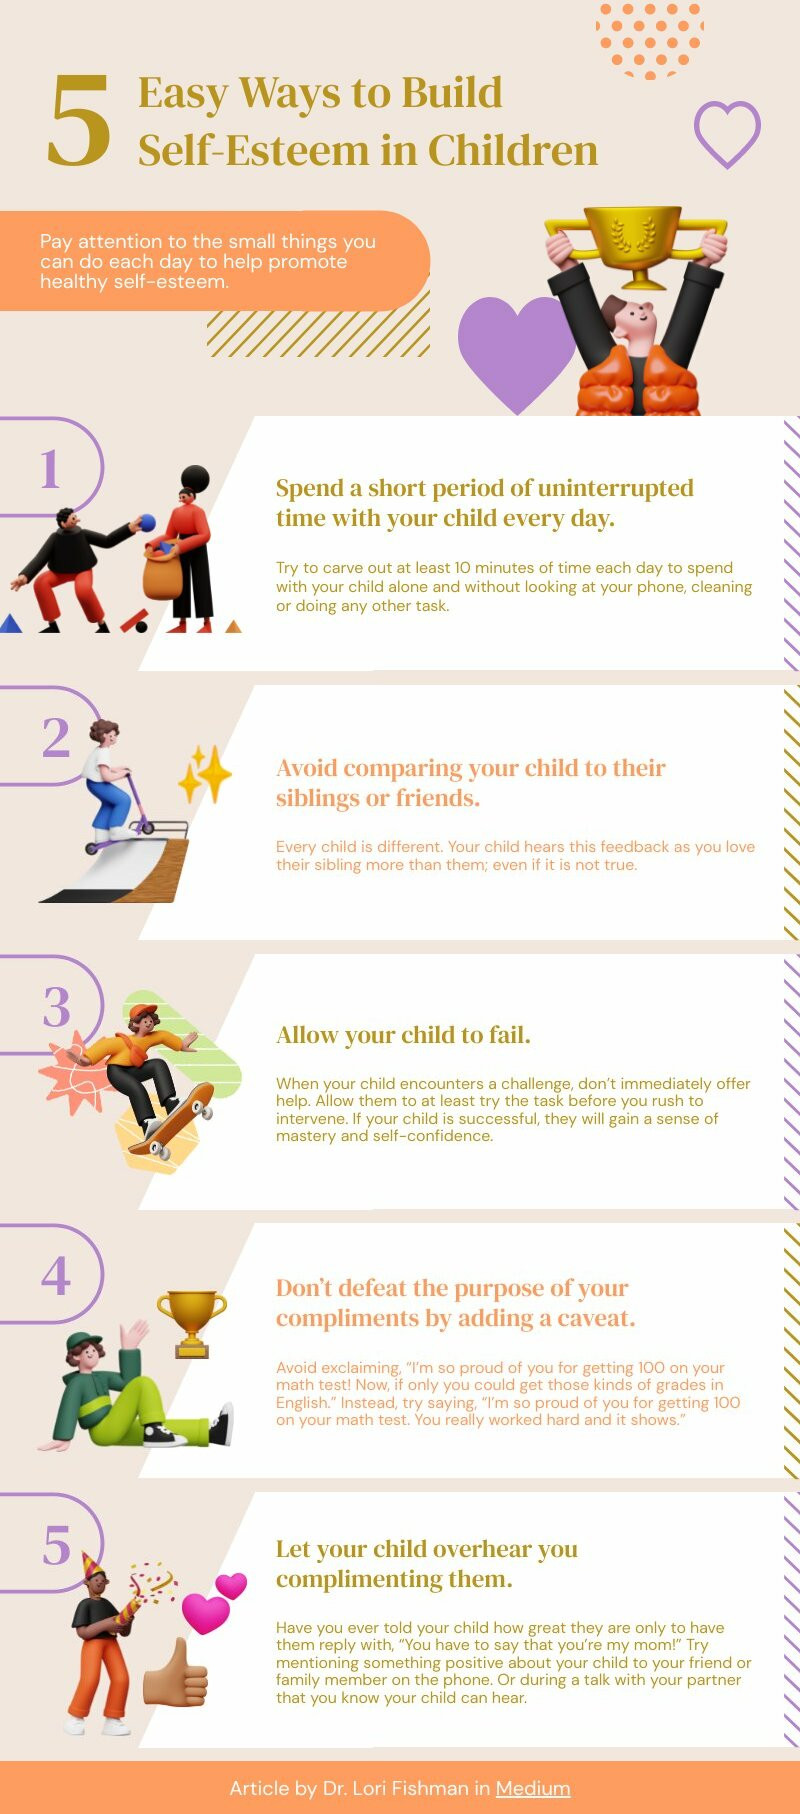 5 easy ways to build self-esteem in children | free infographic